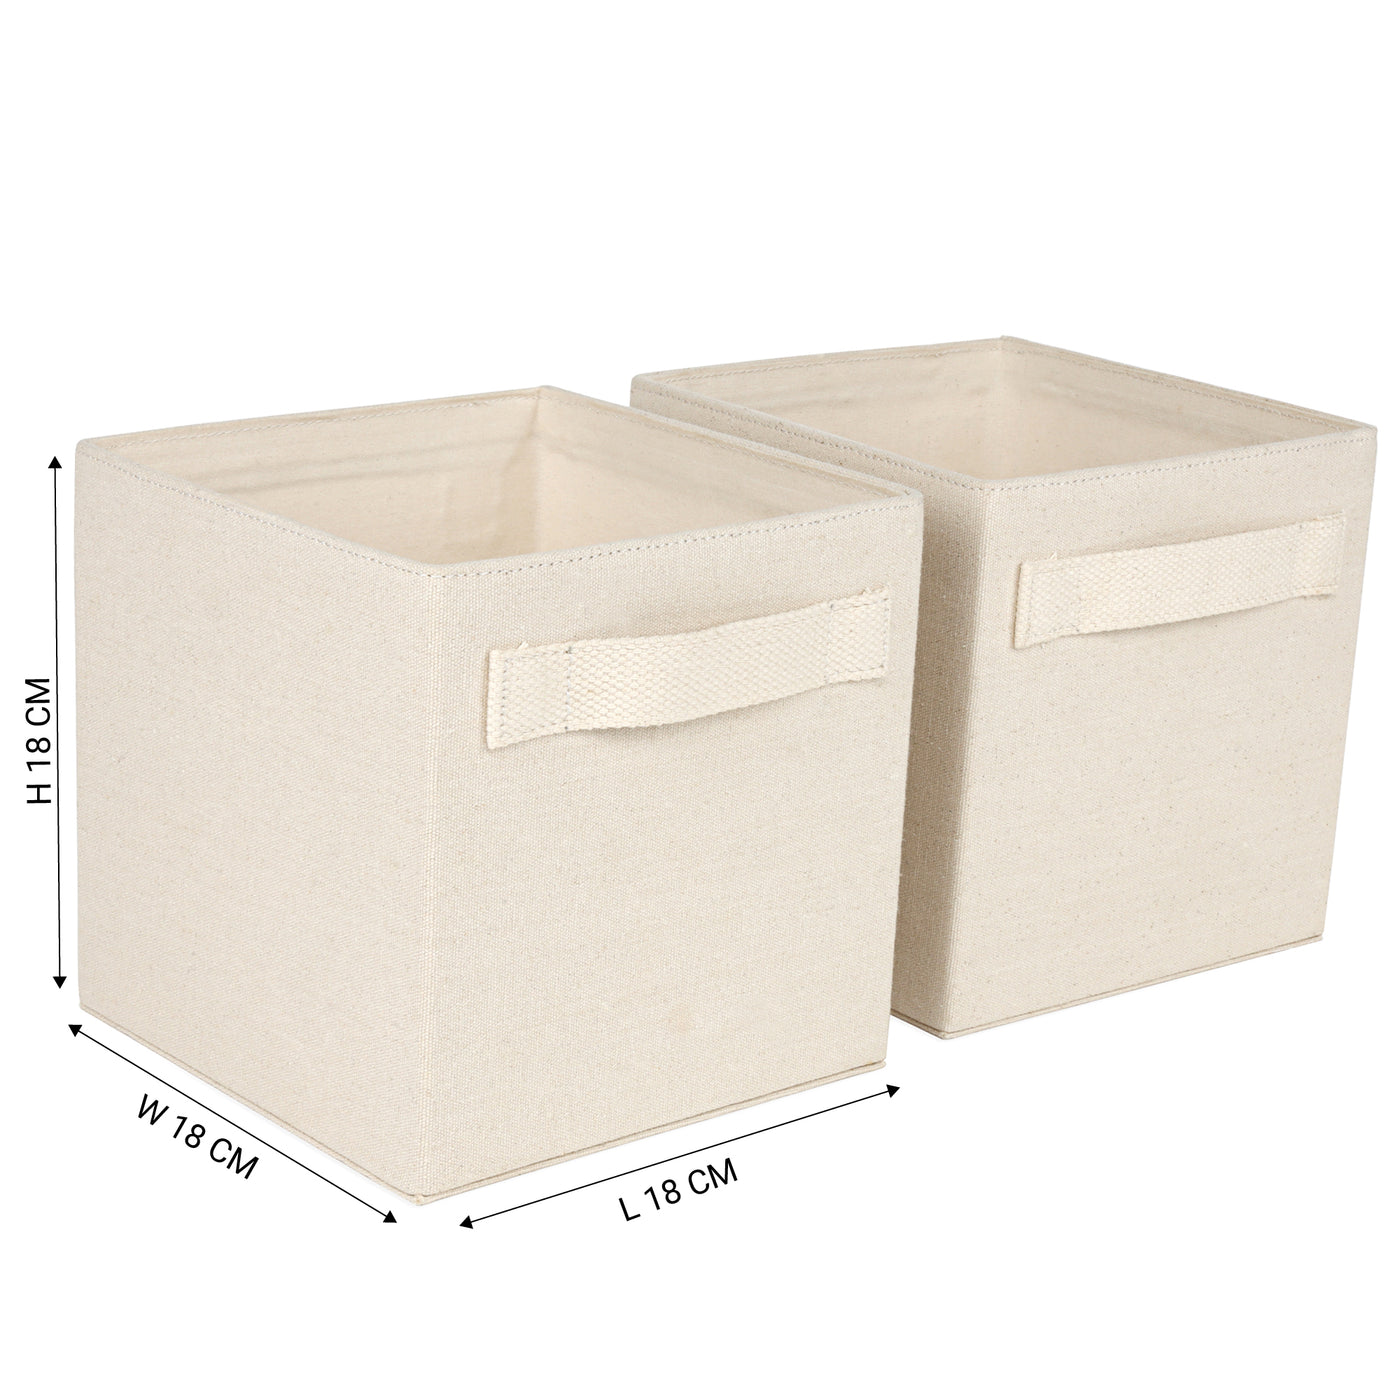 Original Storage Boxes (Set of 2)